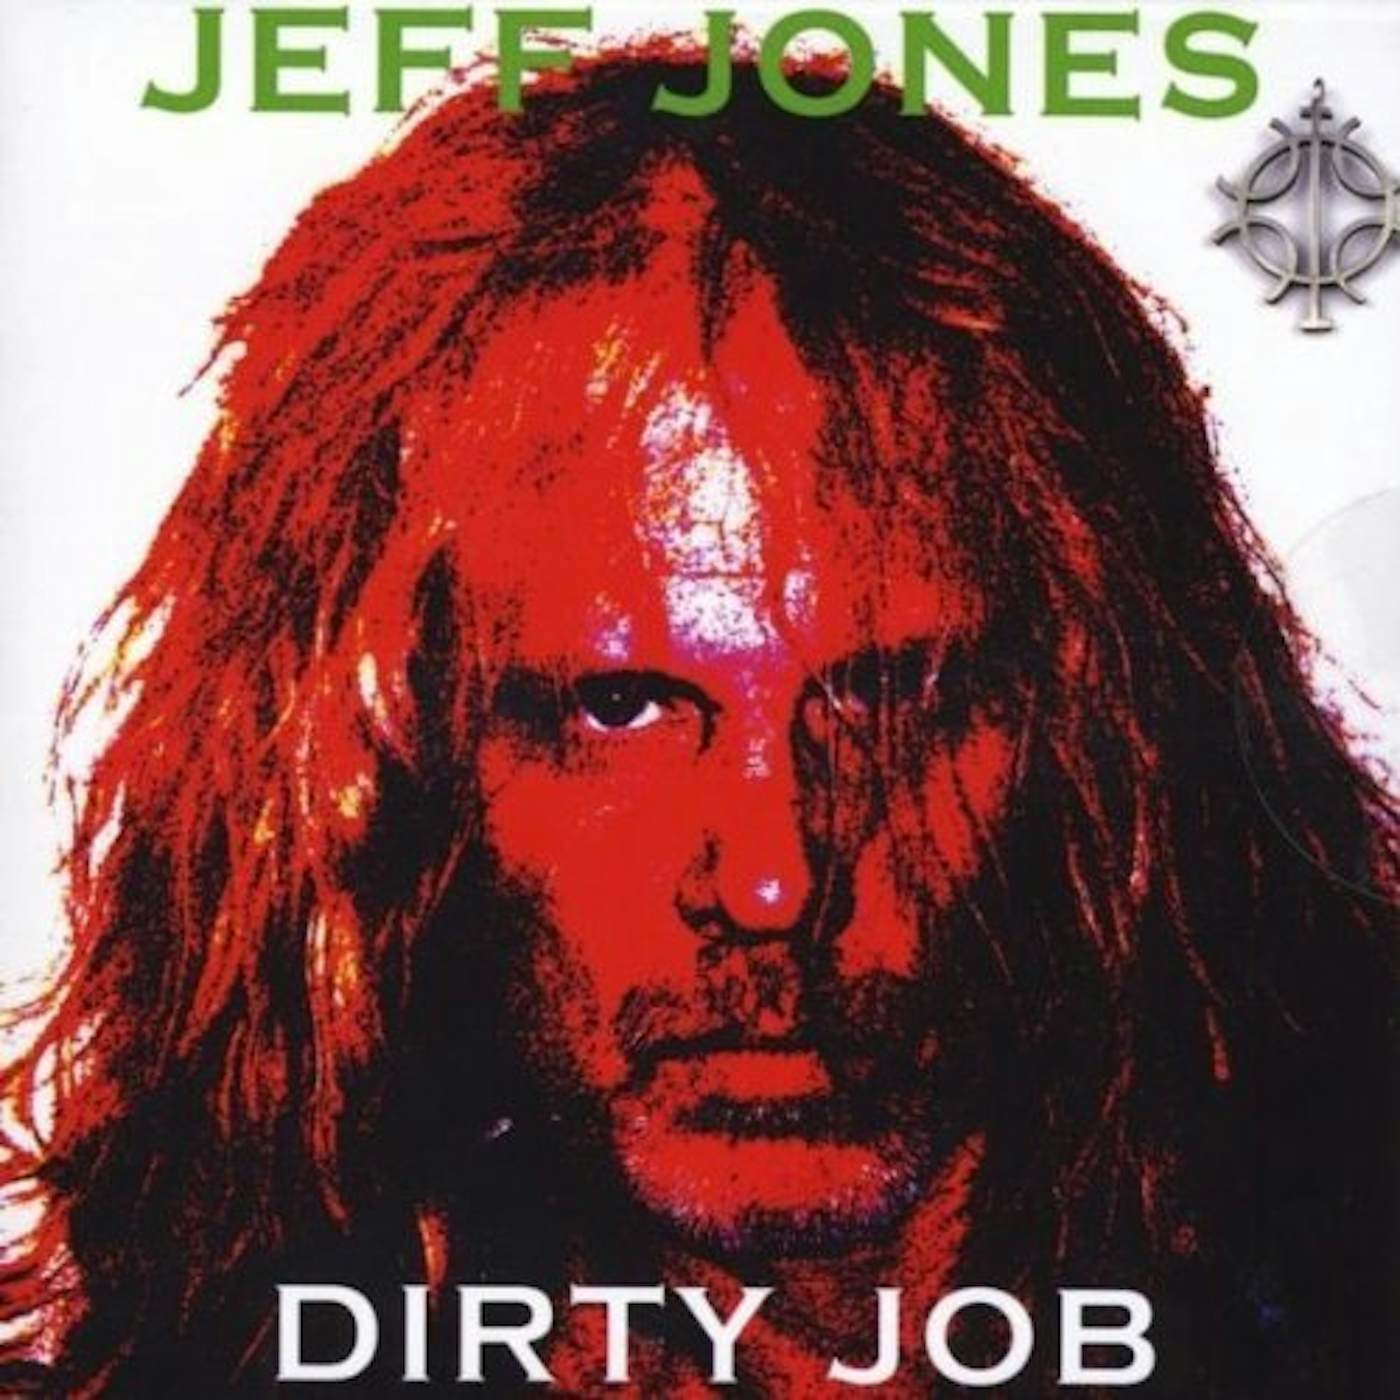 Jeff Jones DIRTY JOB CD